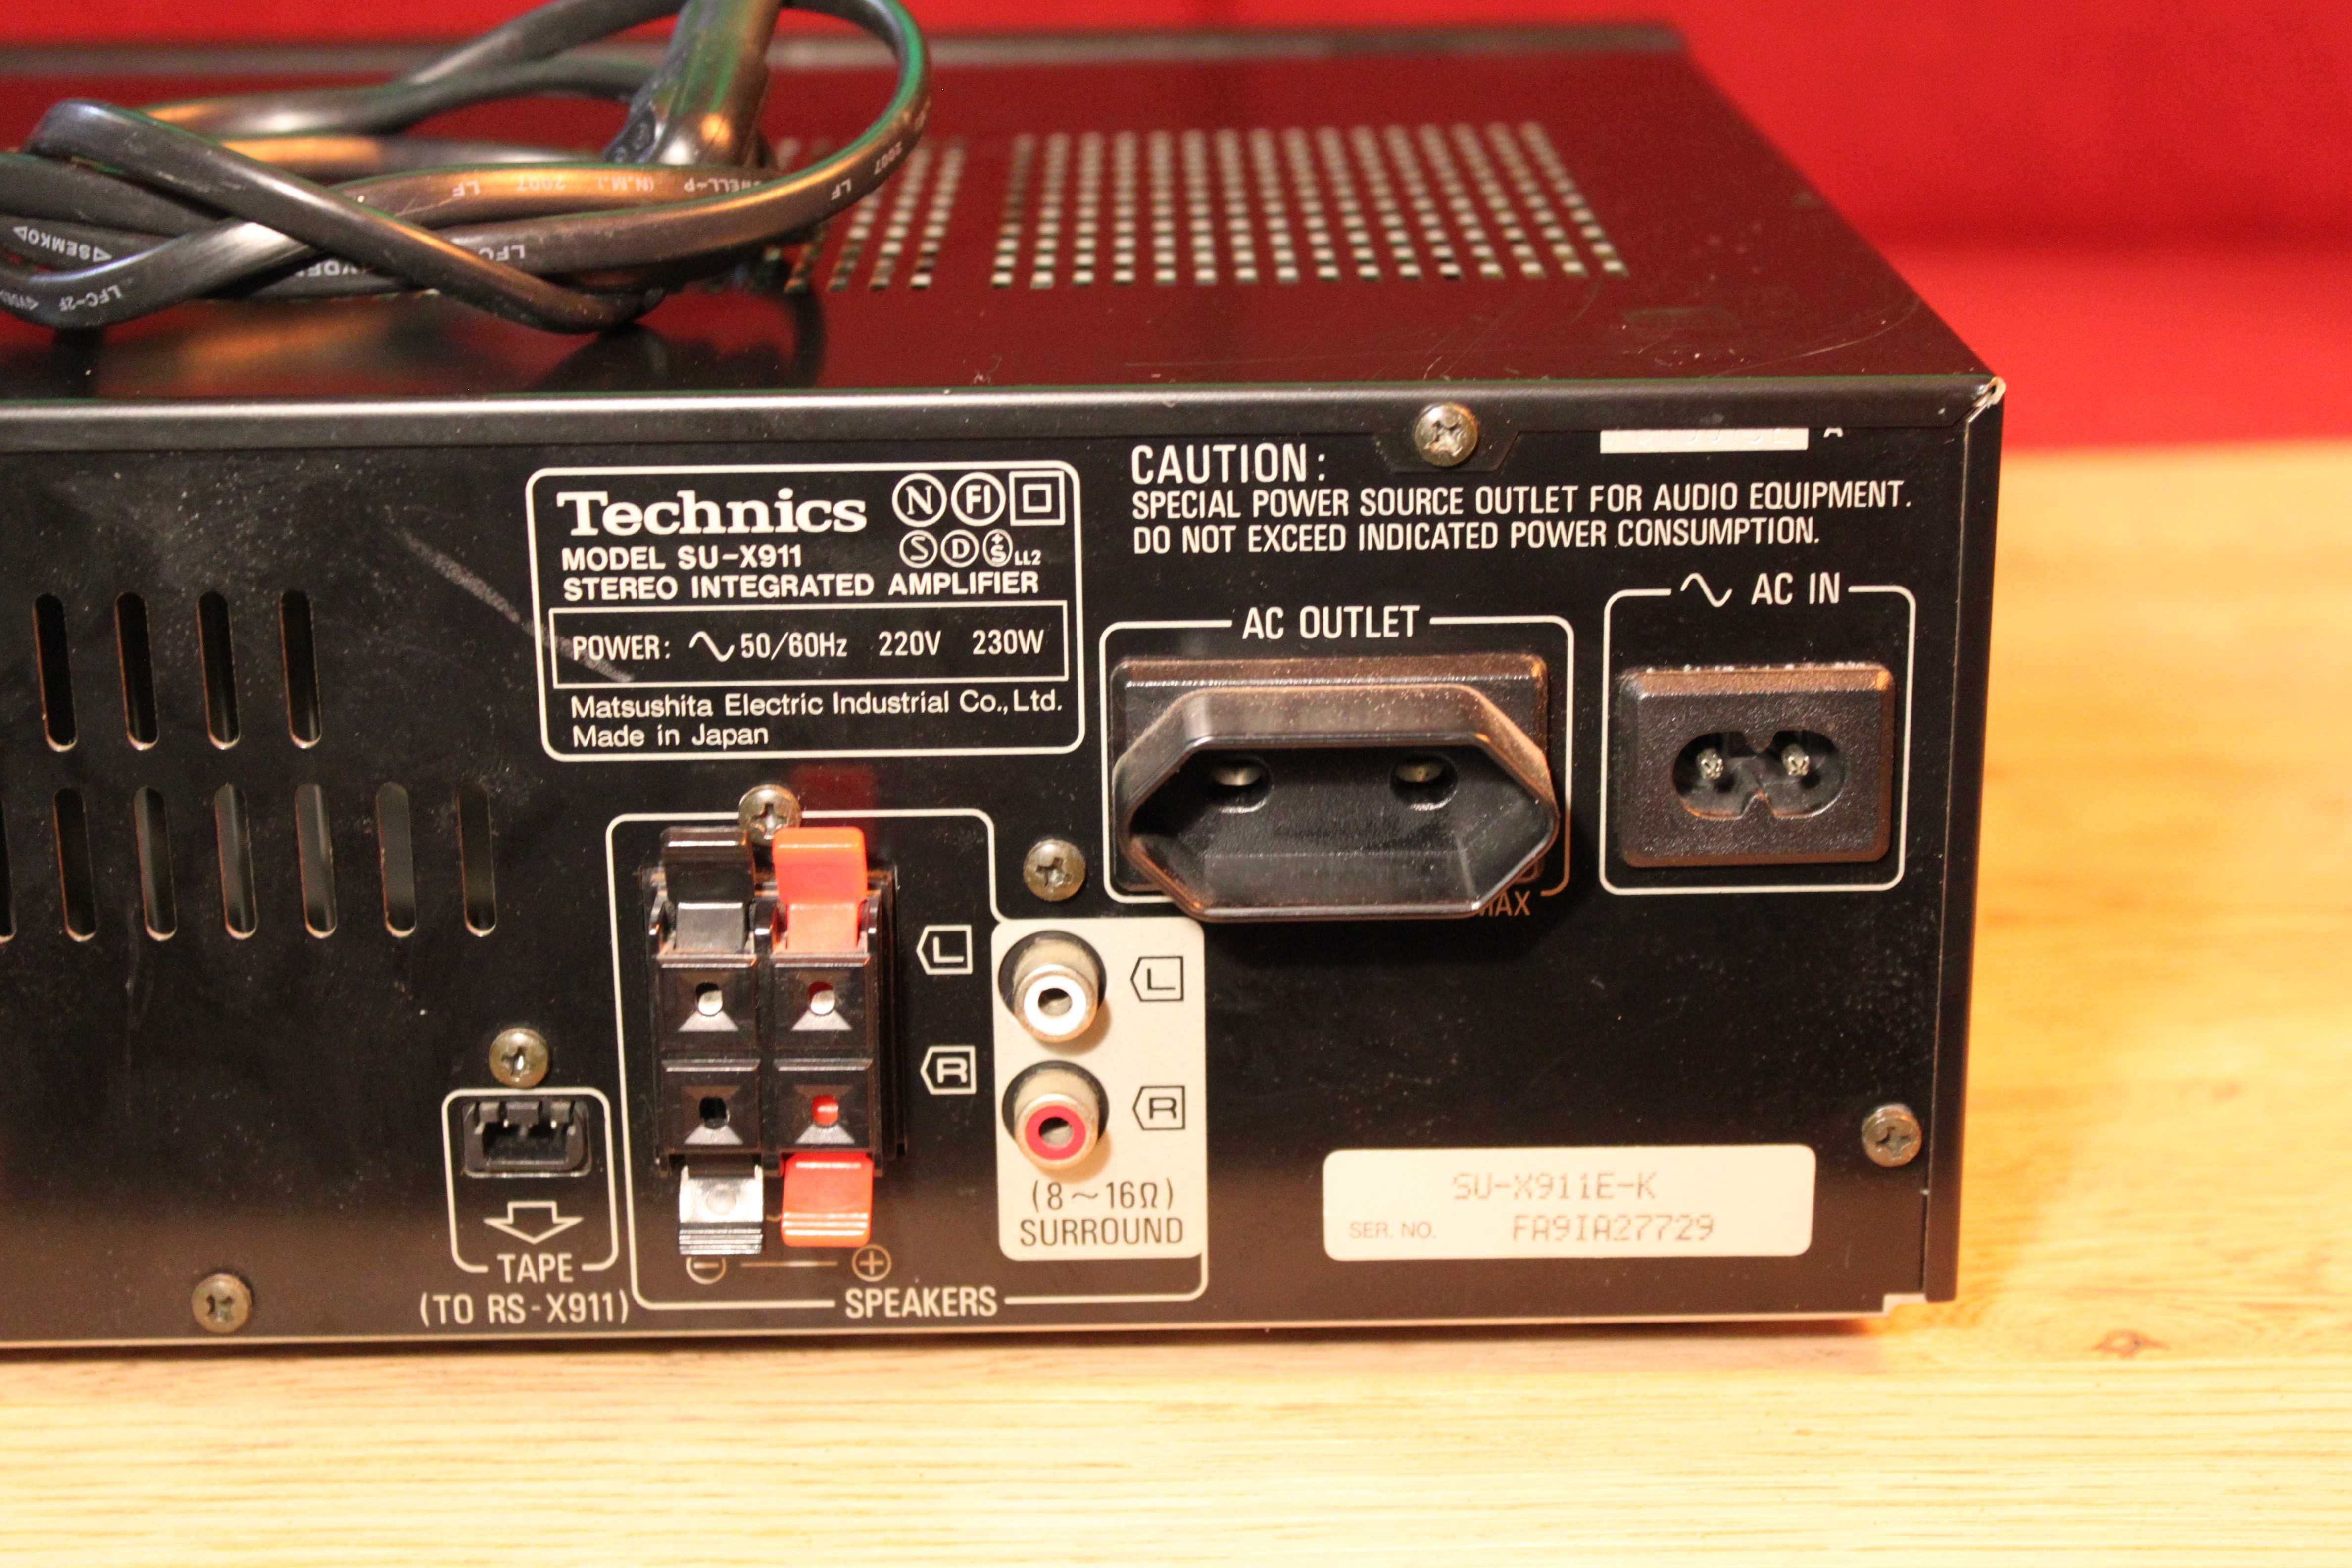 Technics SU-X911 Digital Integrated Amplifier